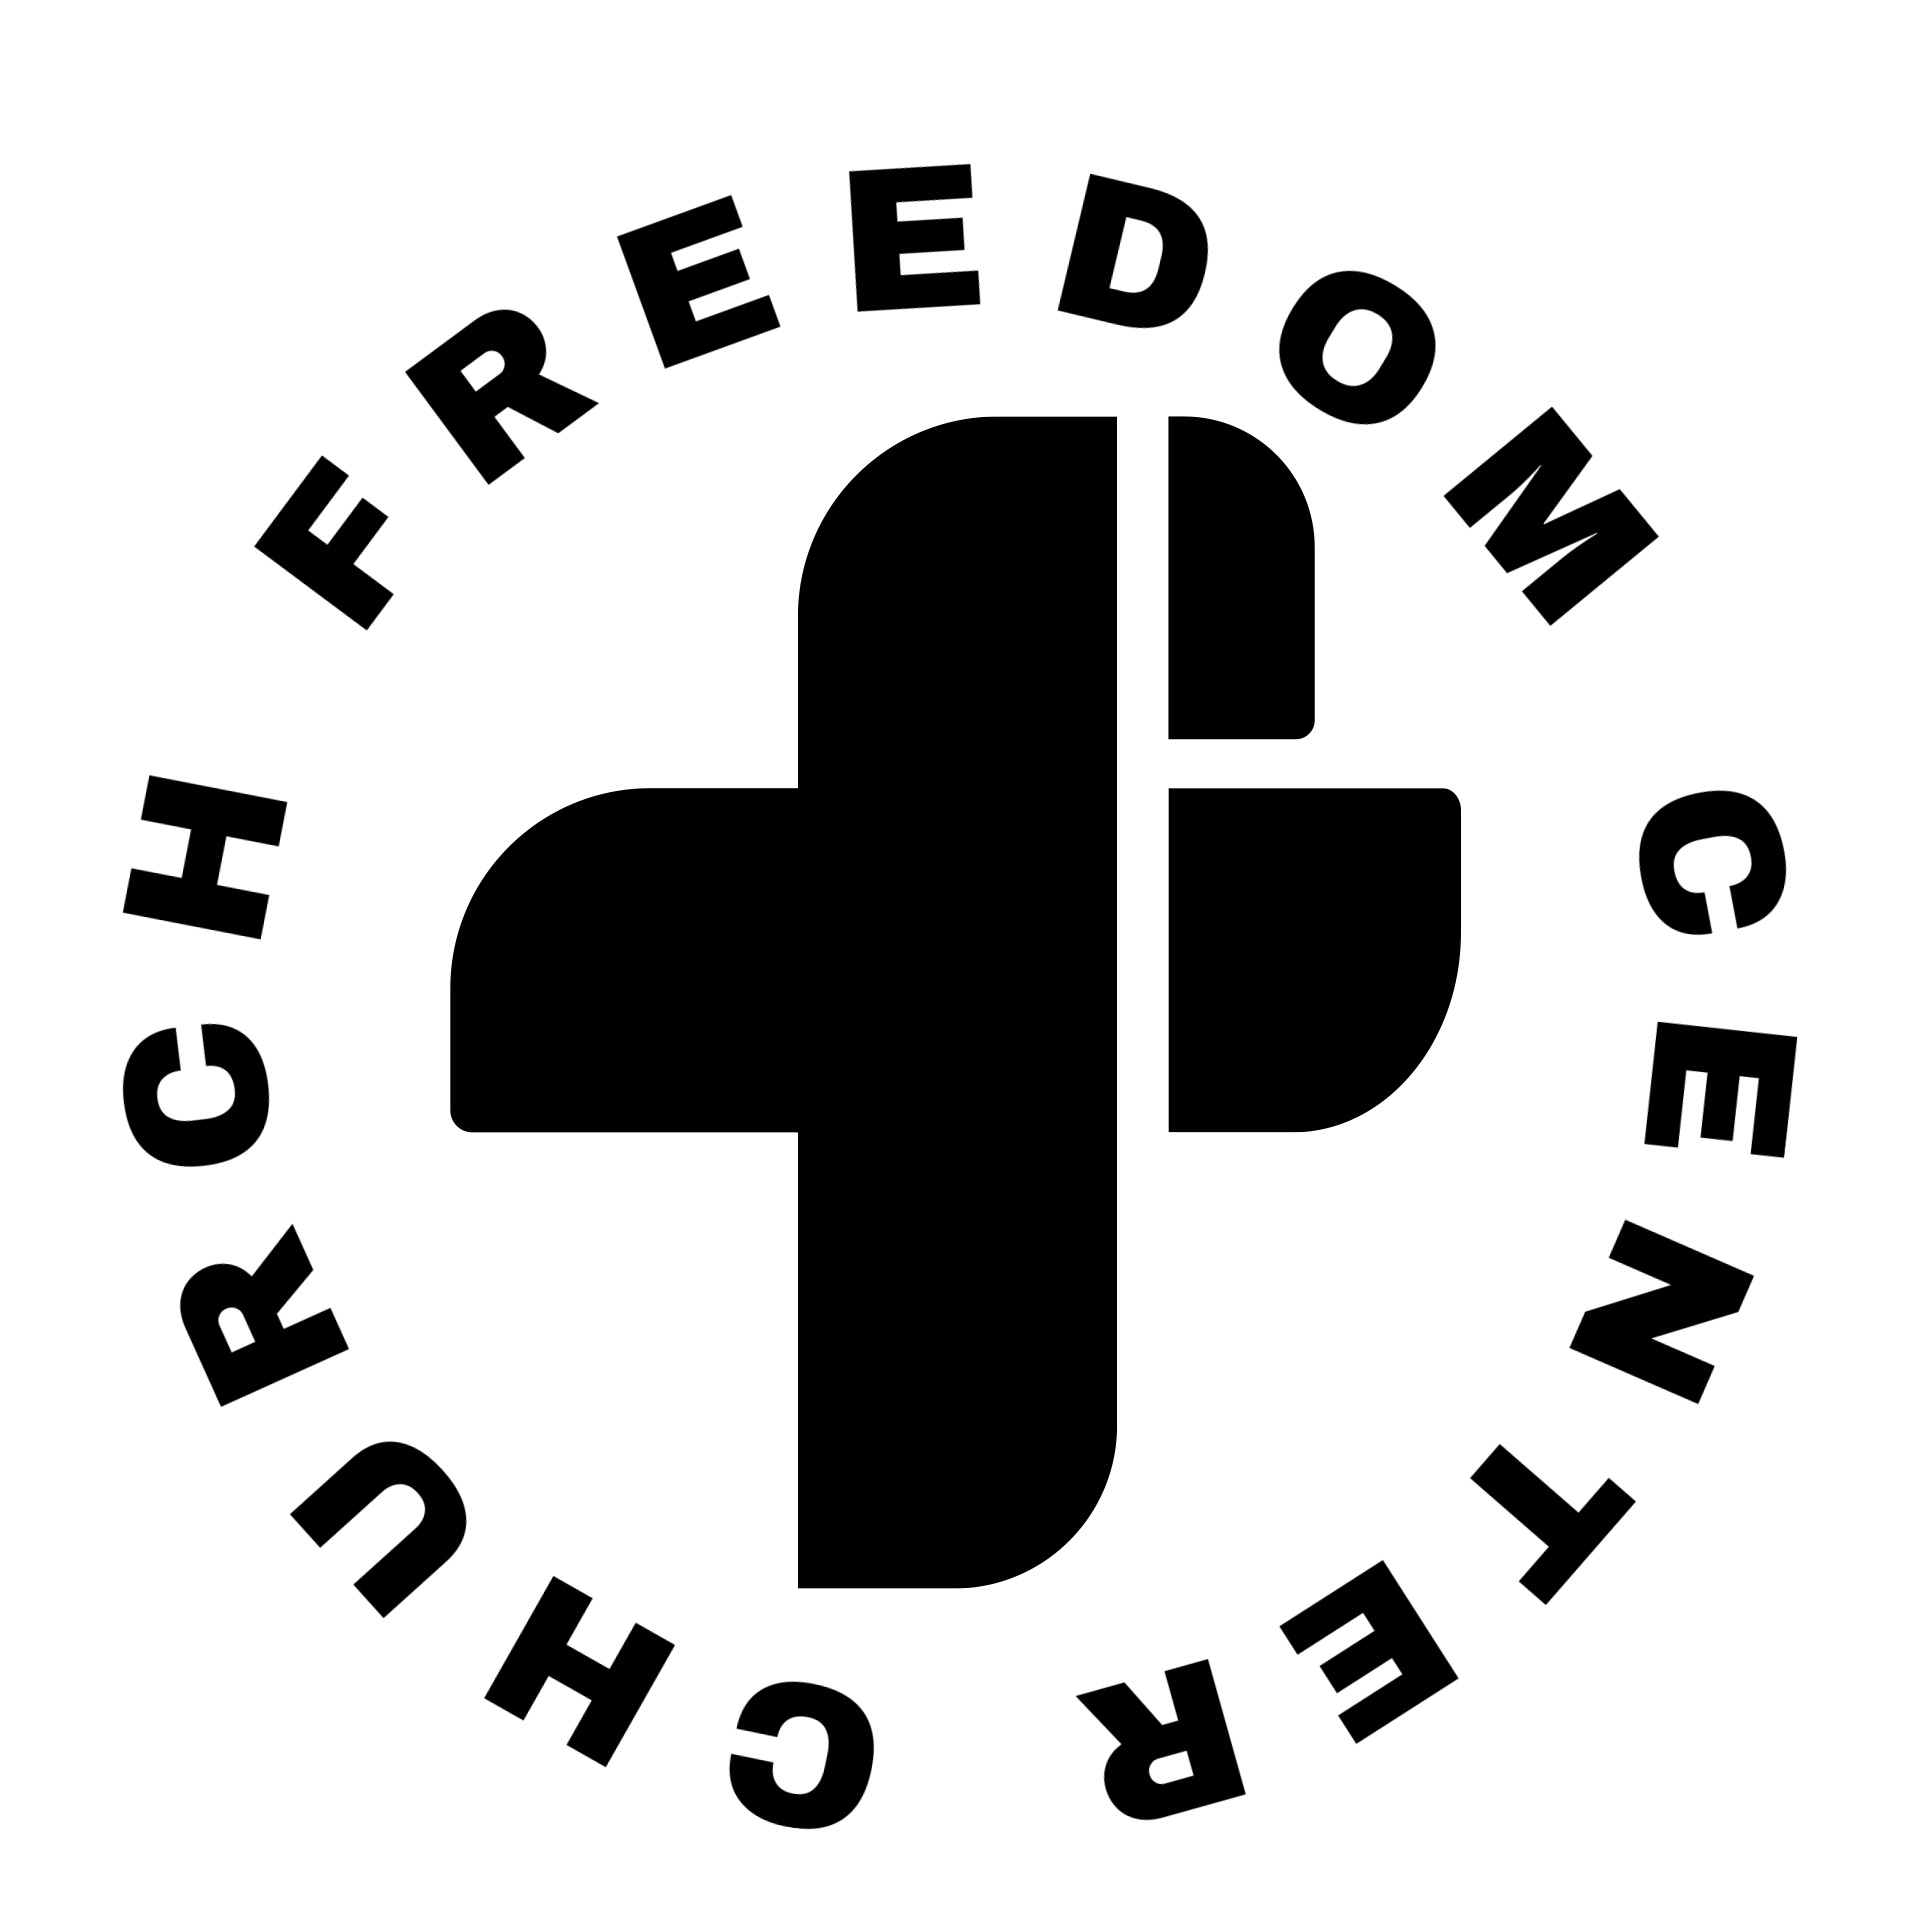 Freedom Center Church